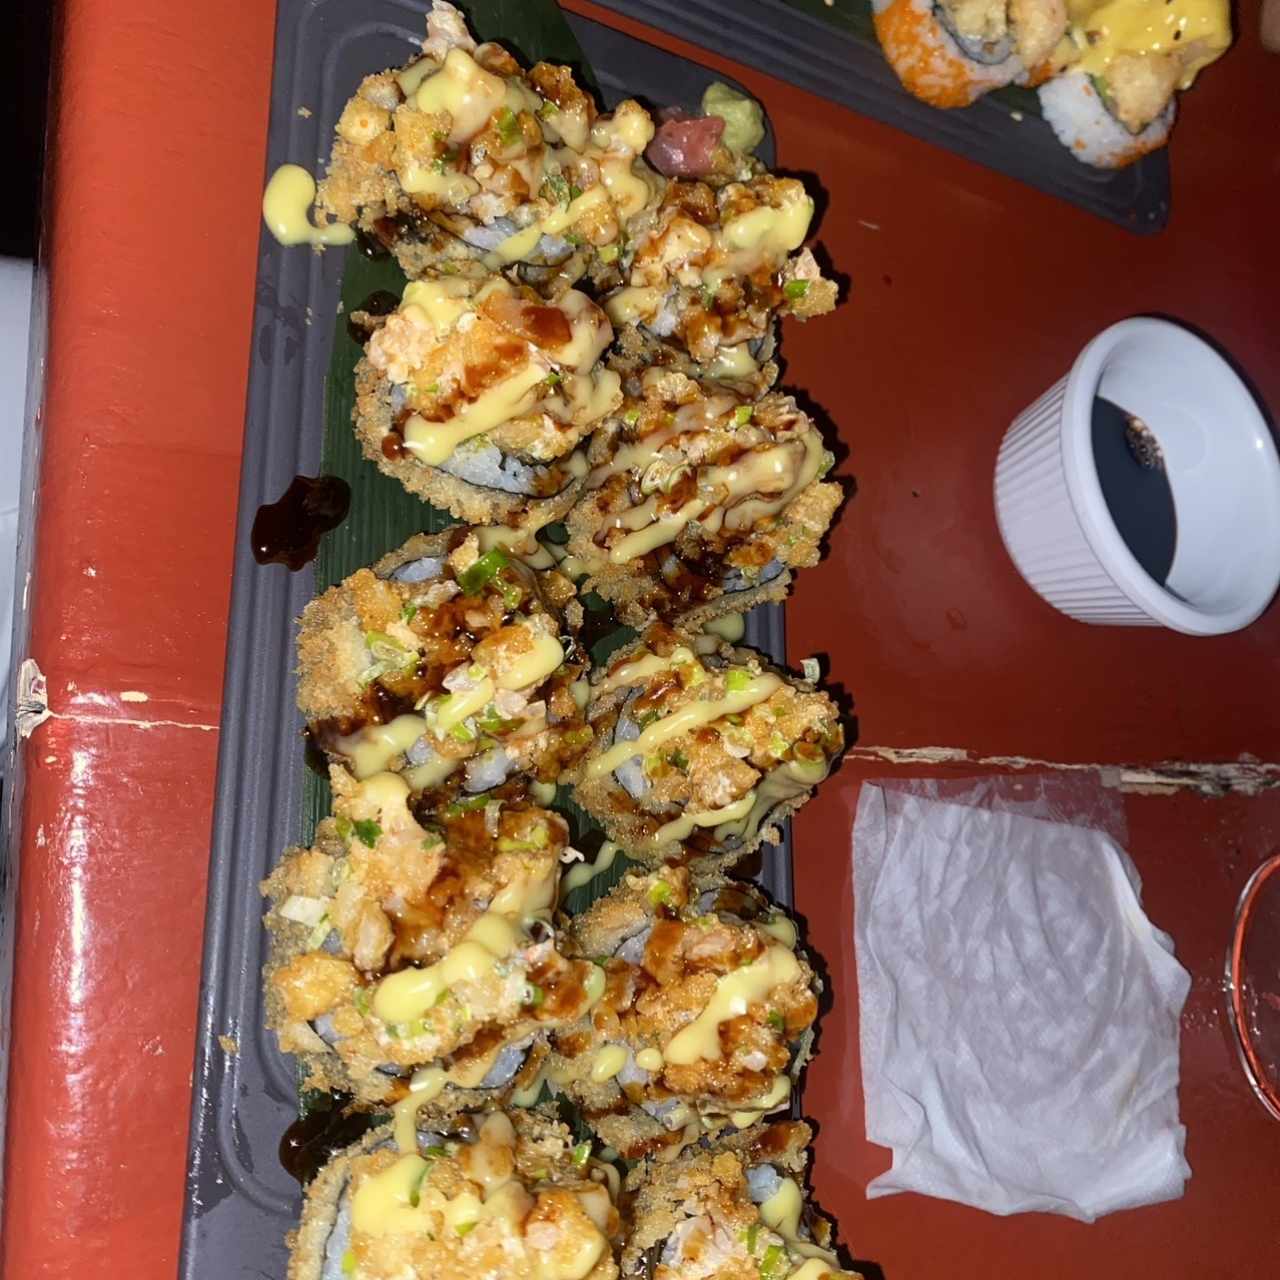 Sushi roll